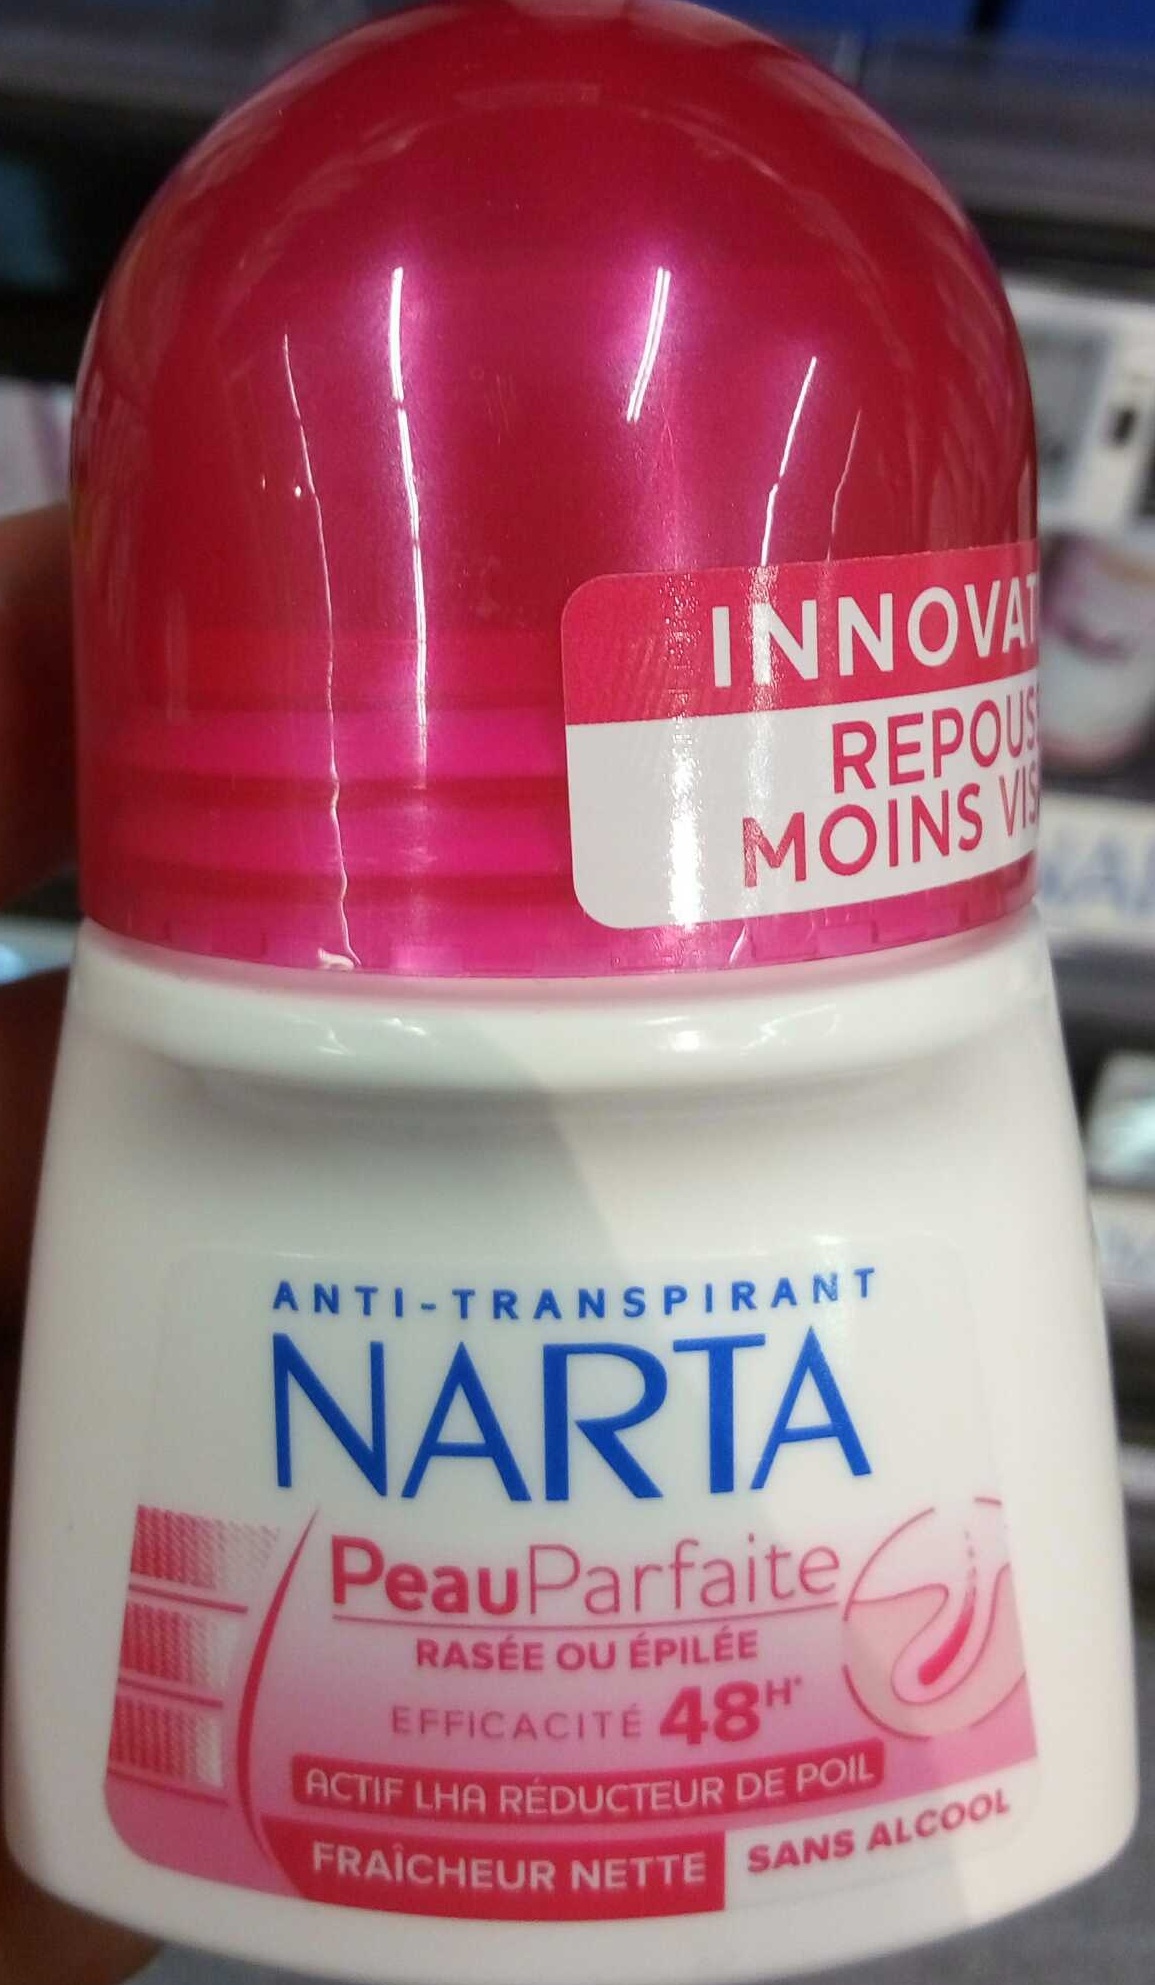 Anti-transpirant Narta Peau parfaite - Produit - fr